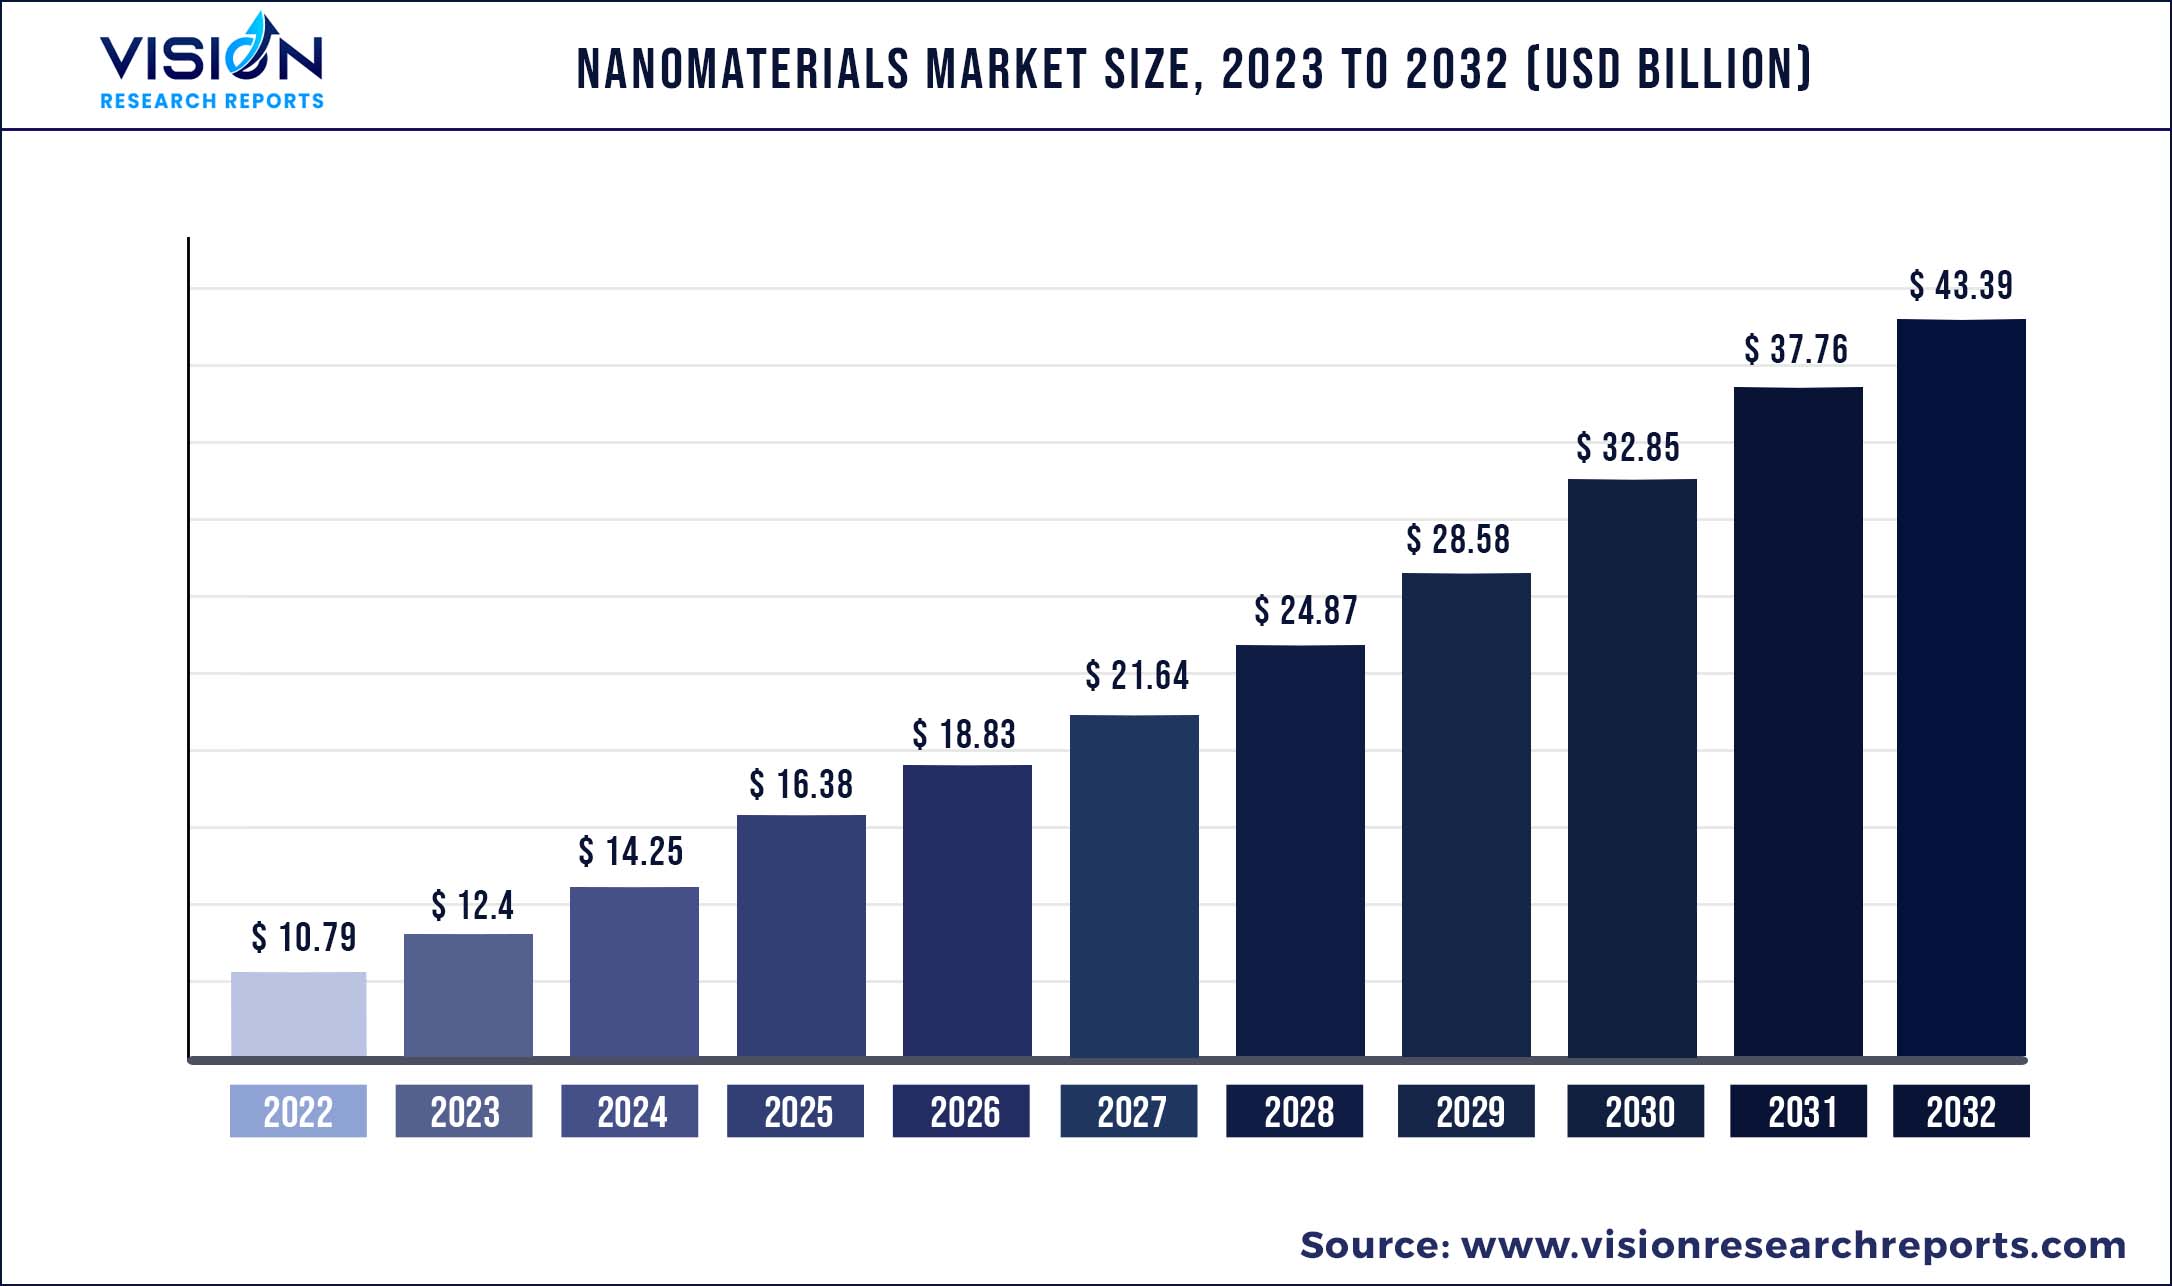 Nanomaterials Market Size 2023 to 2032